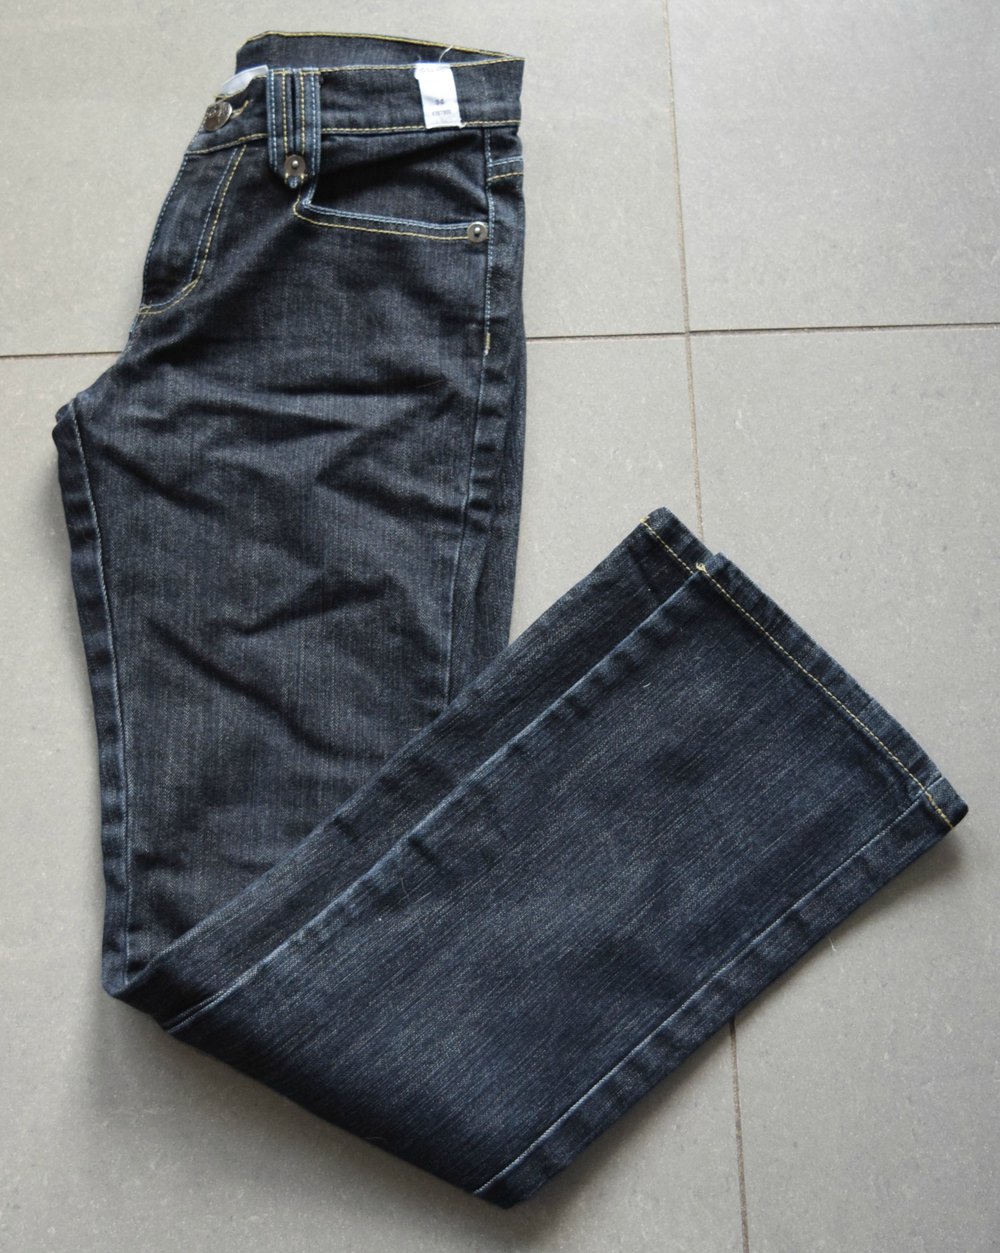 Dunkelblaue Jeans